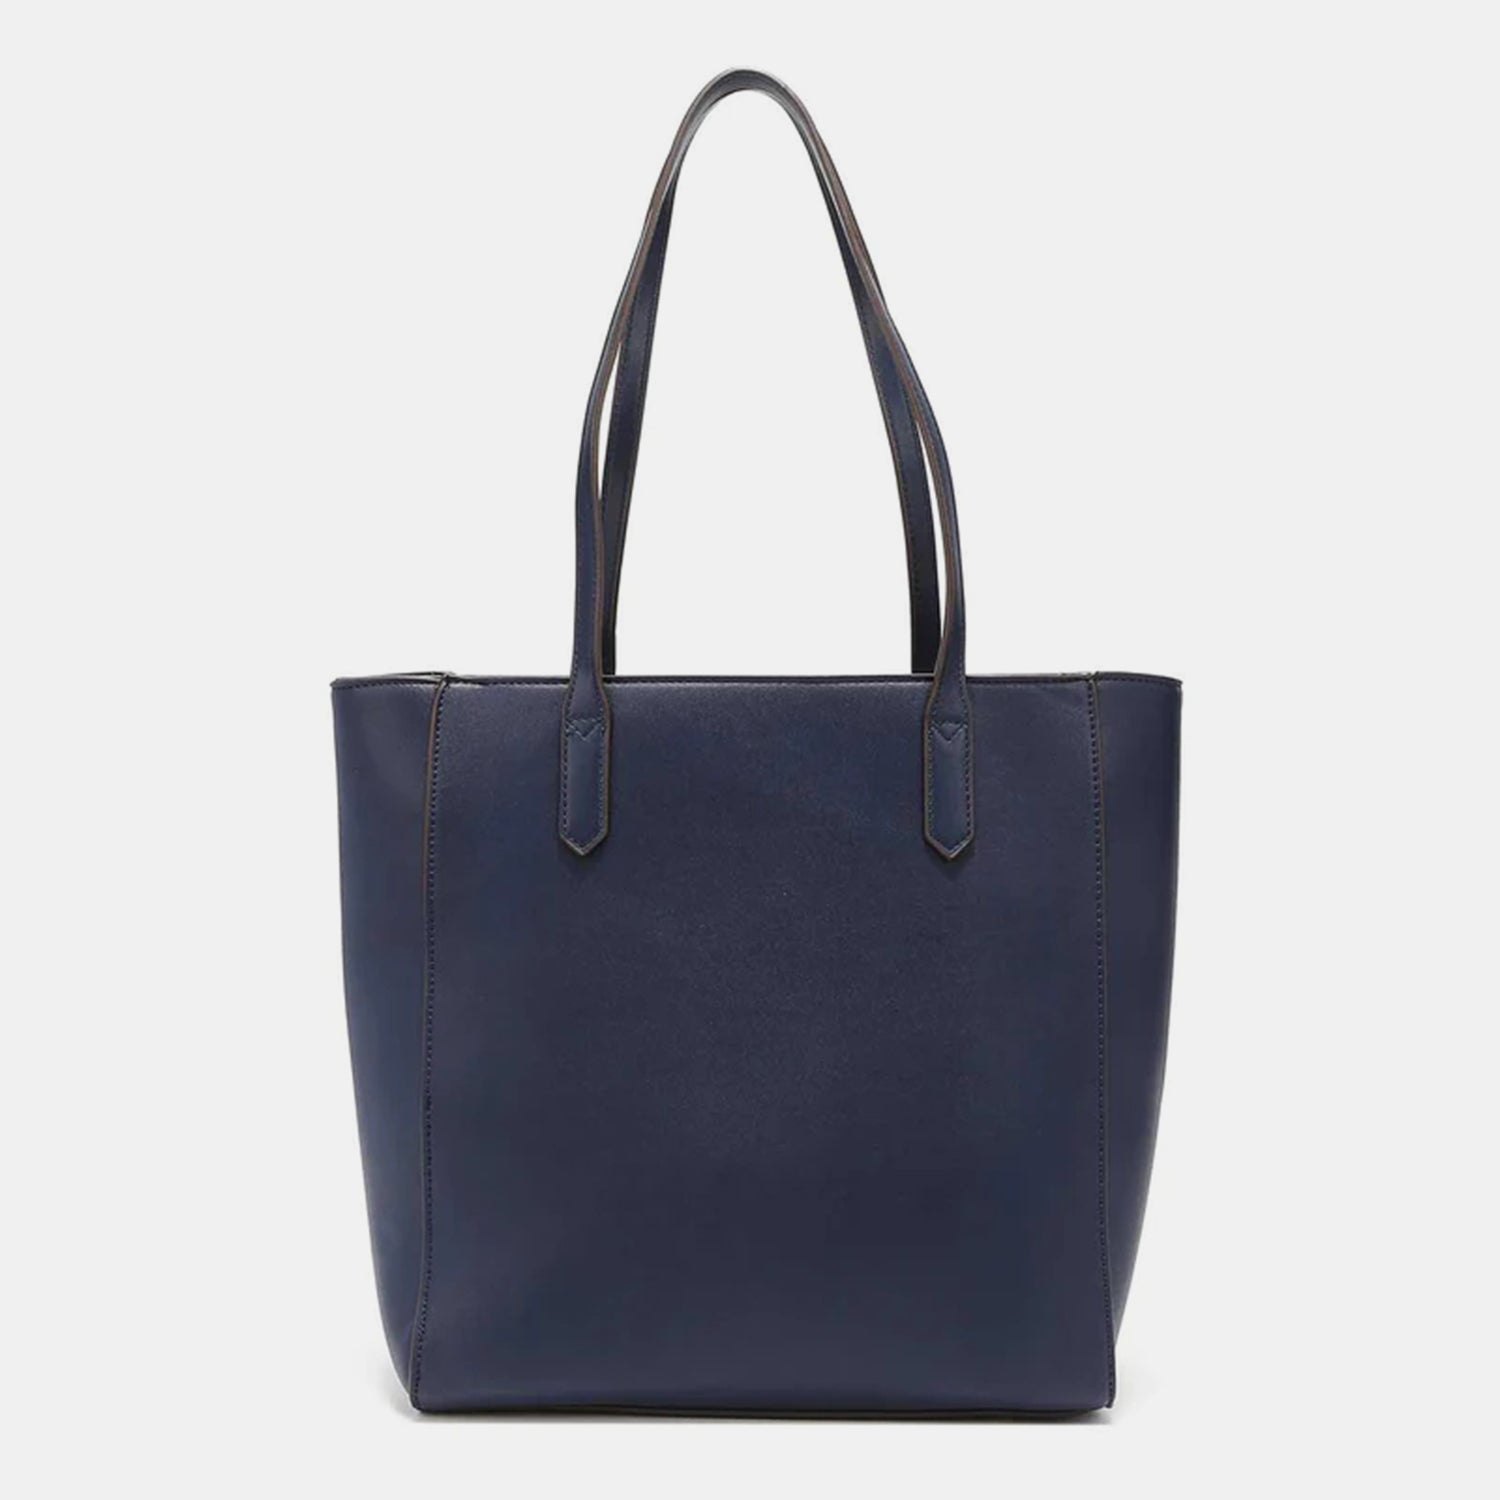 3-Piece Vegan Leather Color Block Handbag SetHandbag SetNicole Lee USA